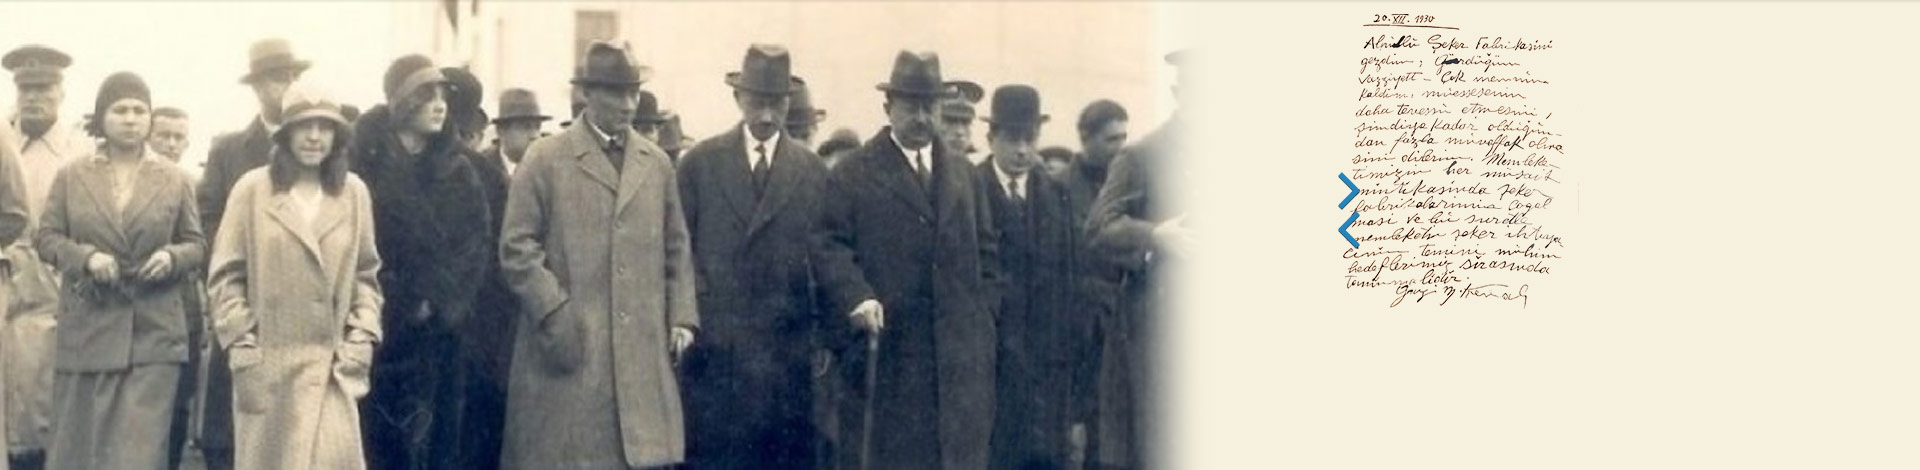 Impression of Atatürk's Visit